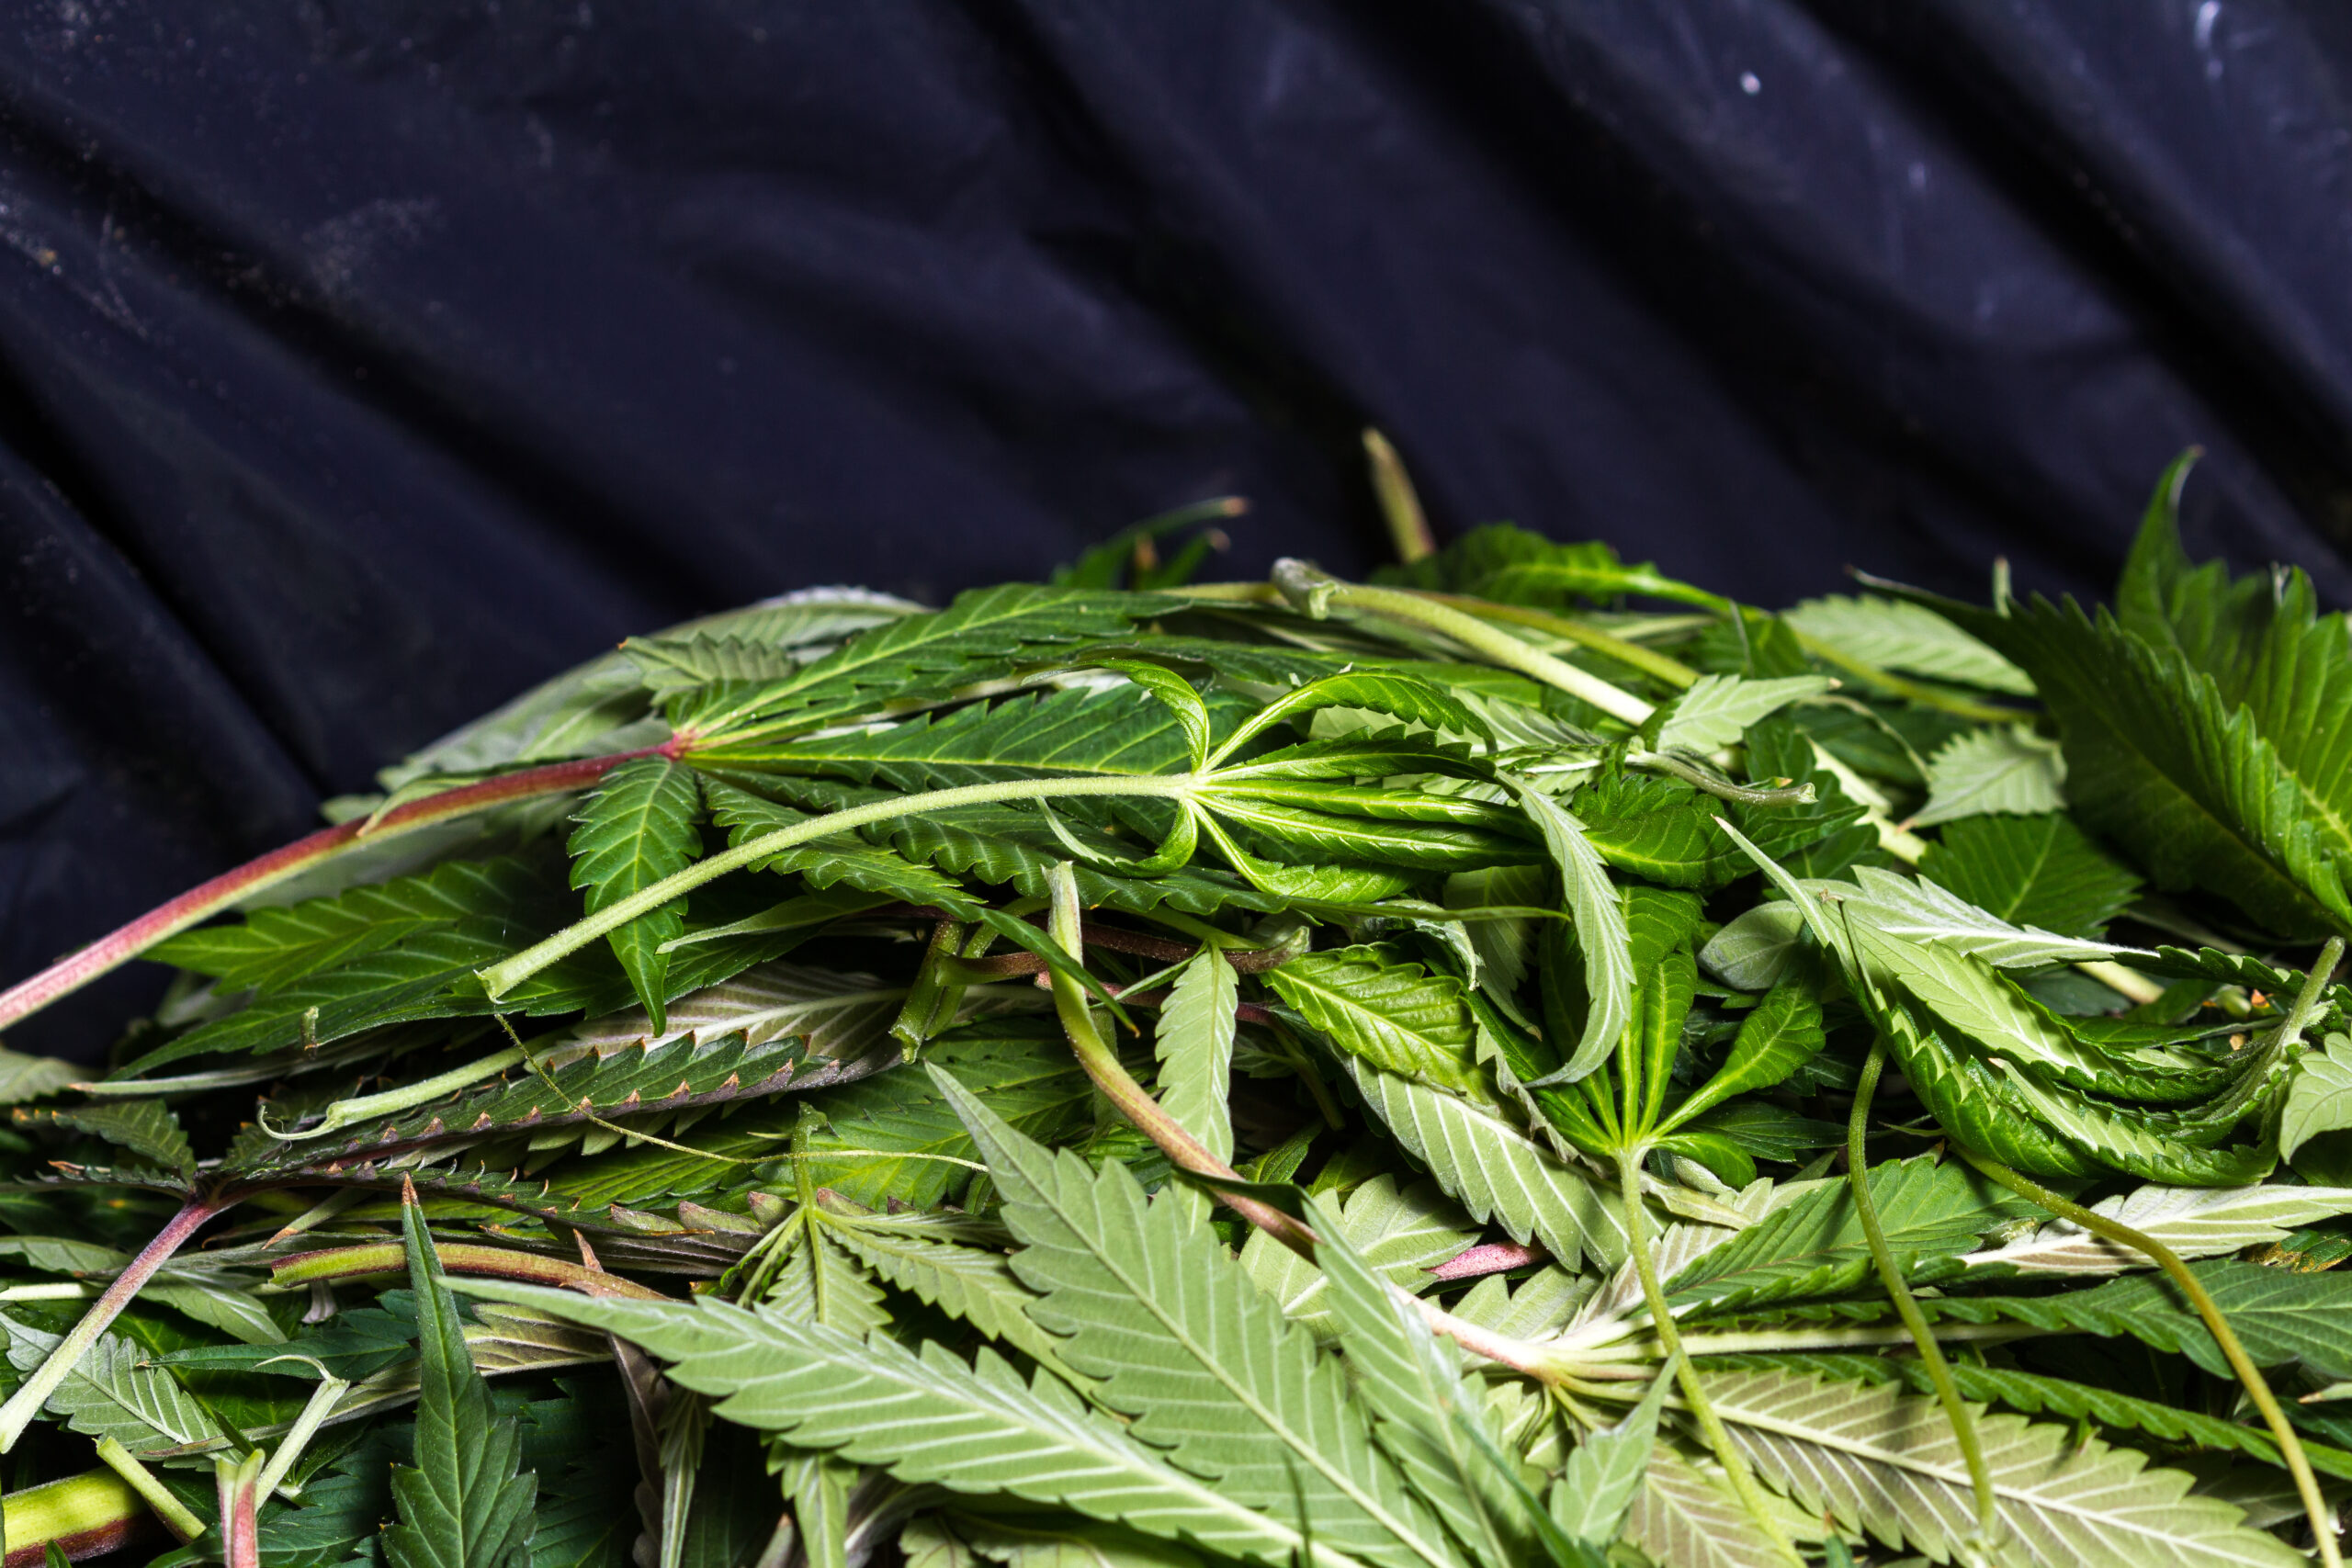 A pile of marijuana plant waste